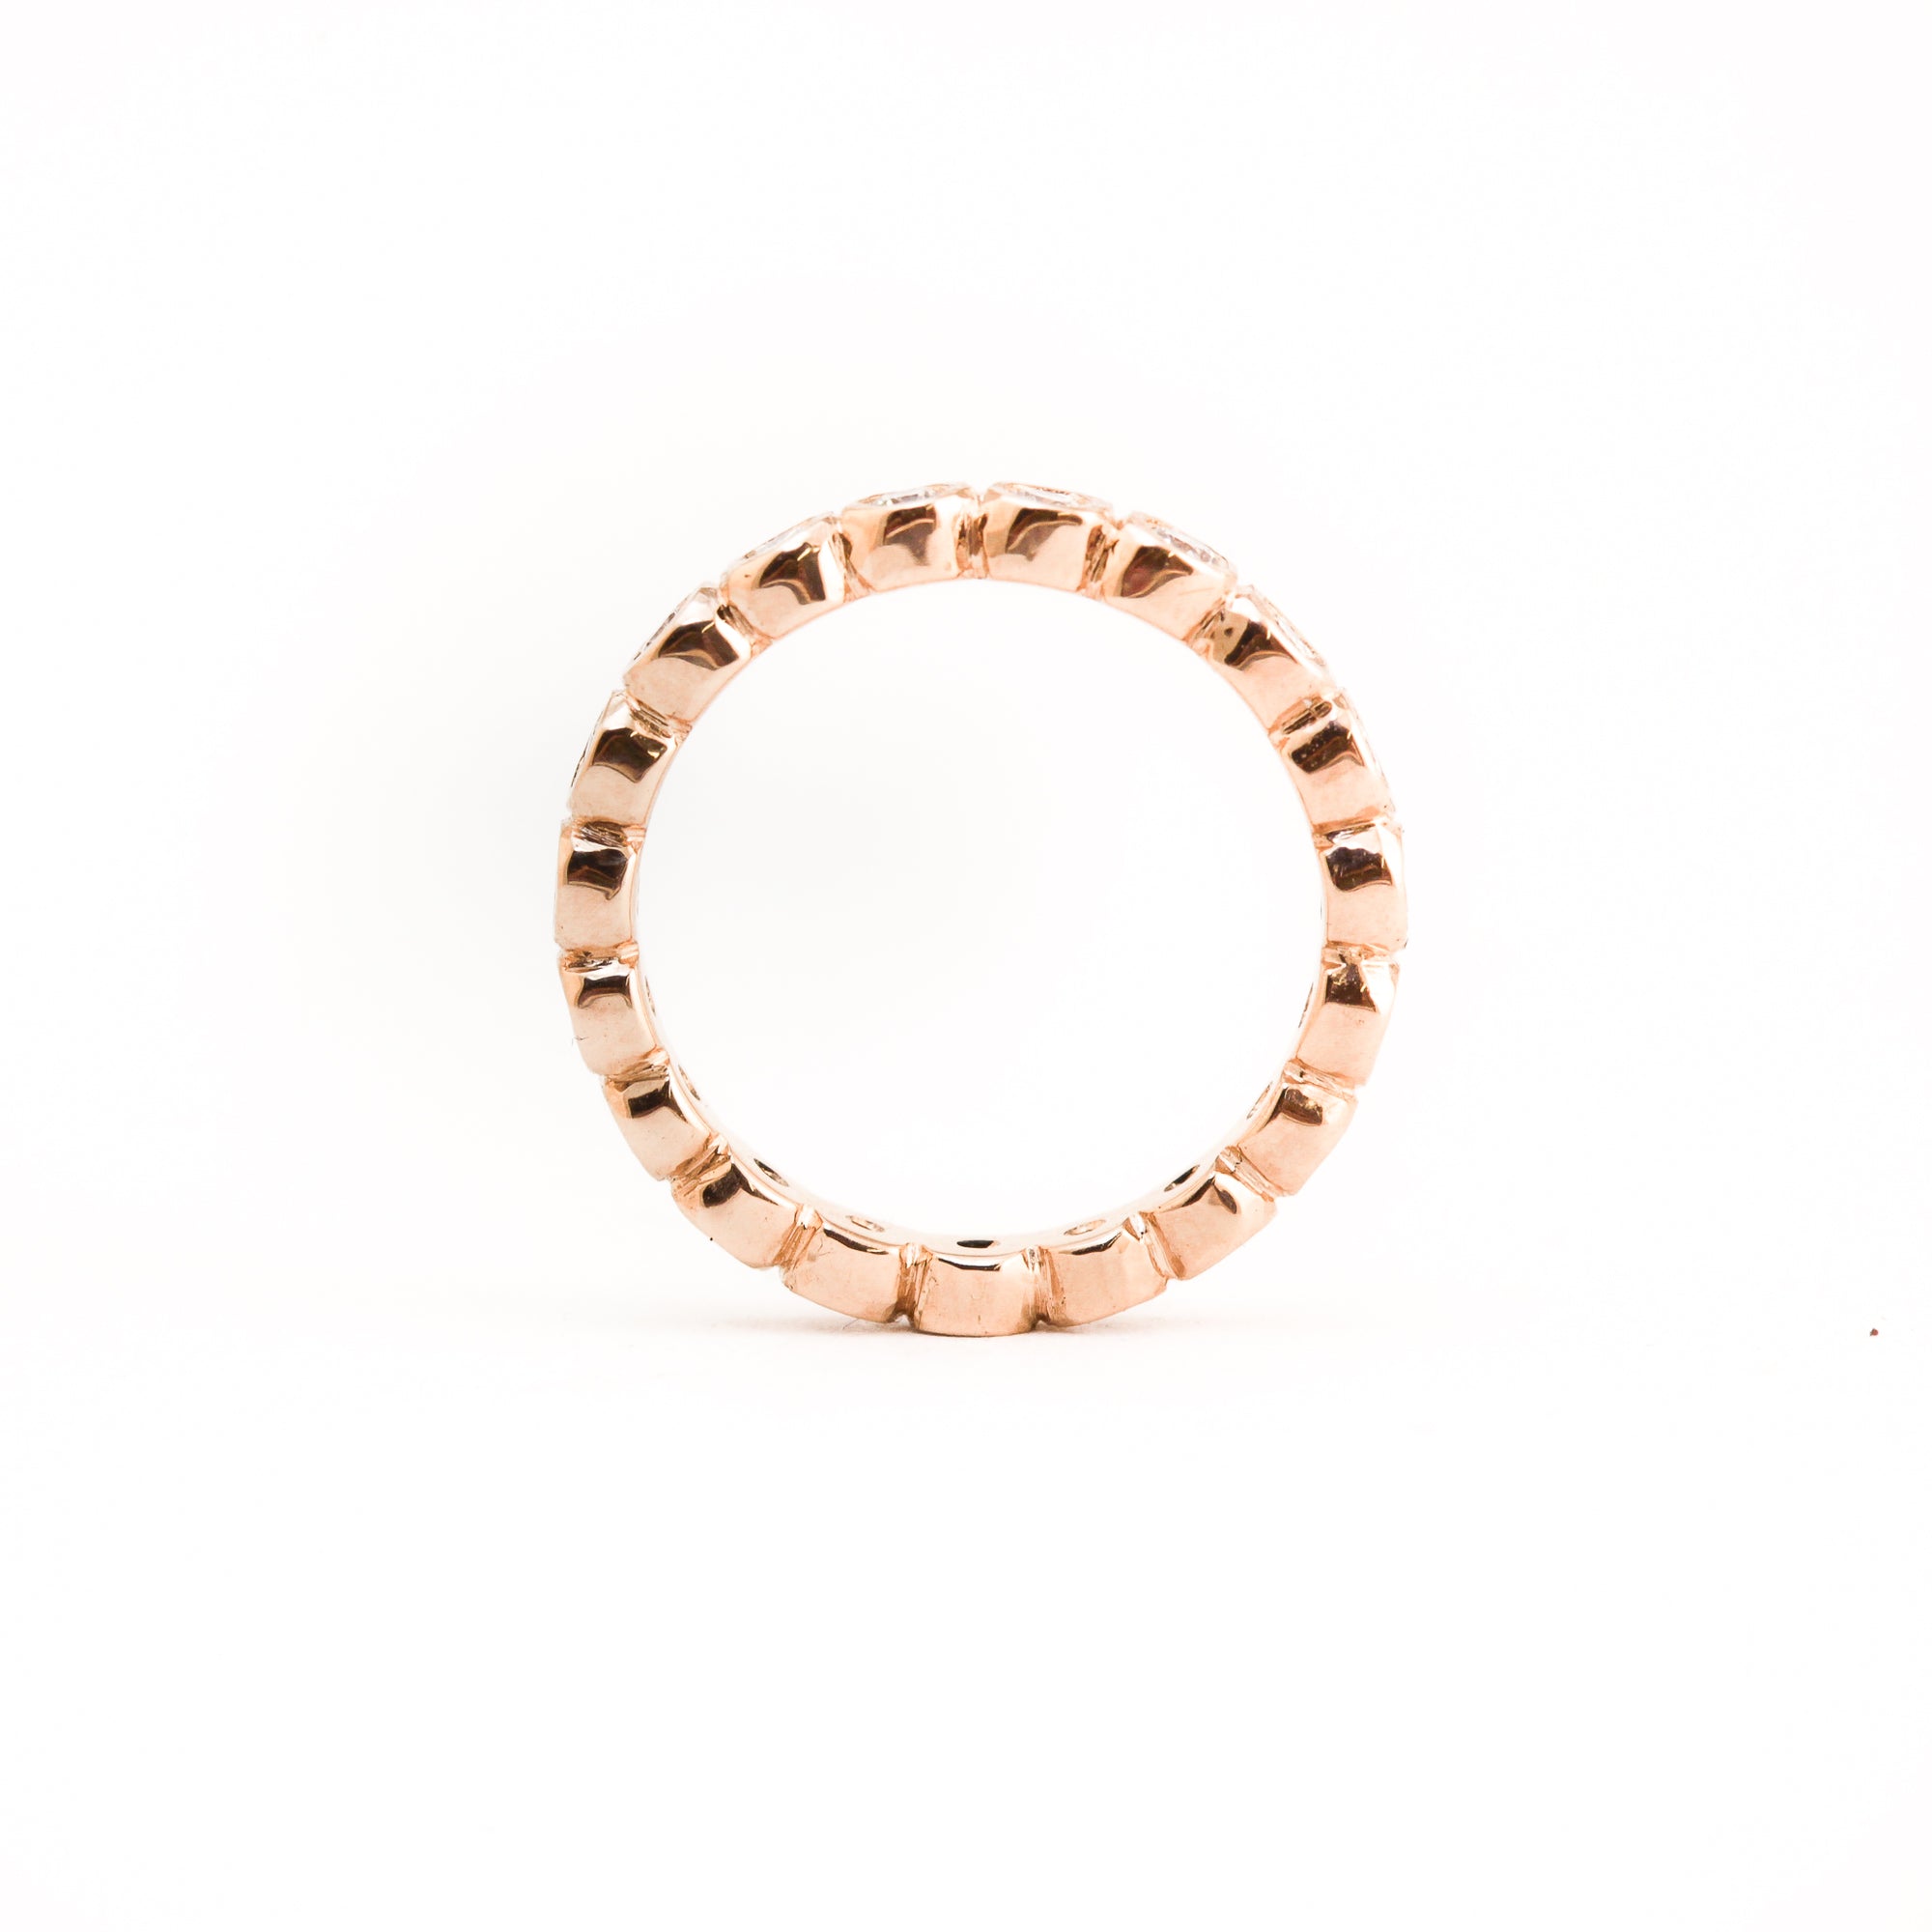 Bespoke 18 carat rose gold eternity ring, set with 23 round brilliant cut white diamonds.